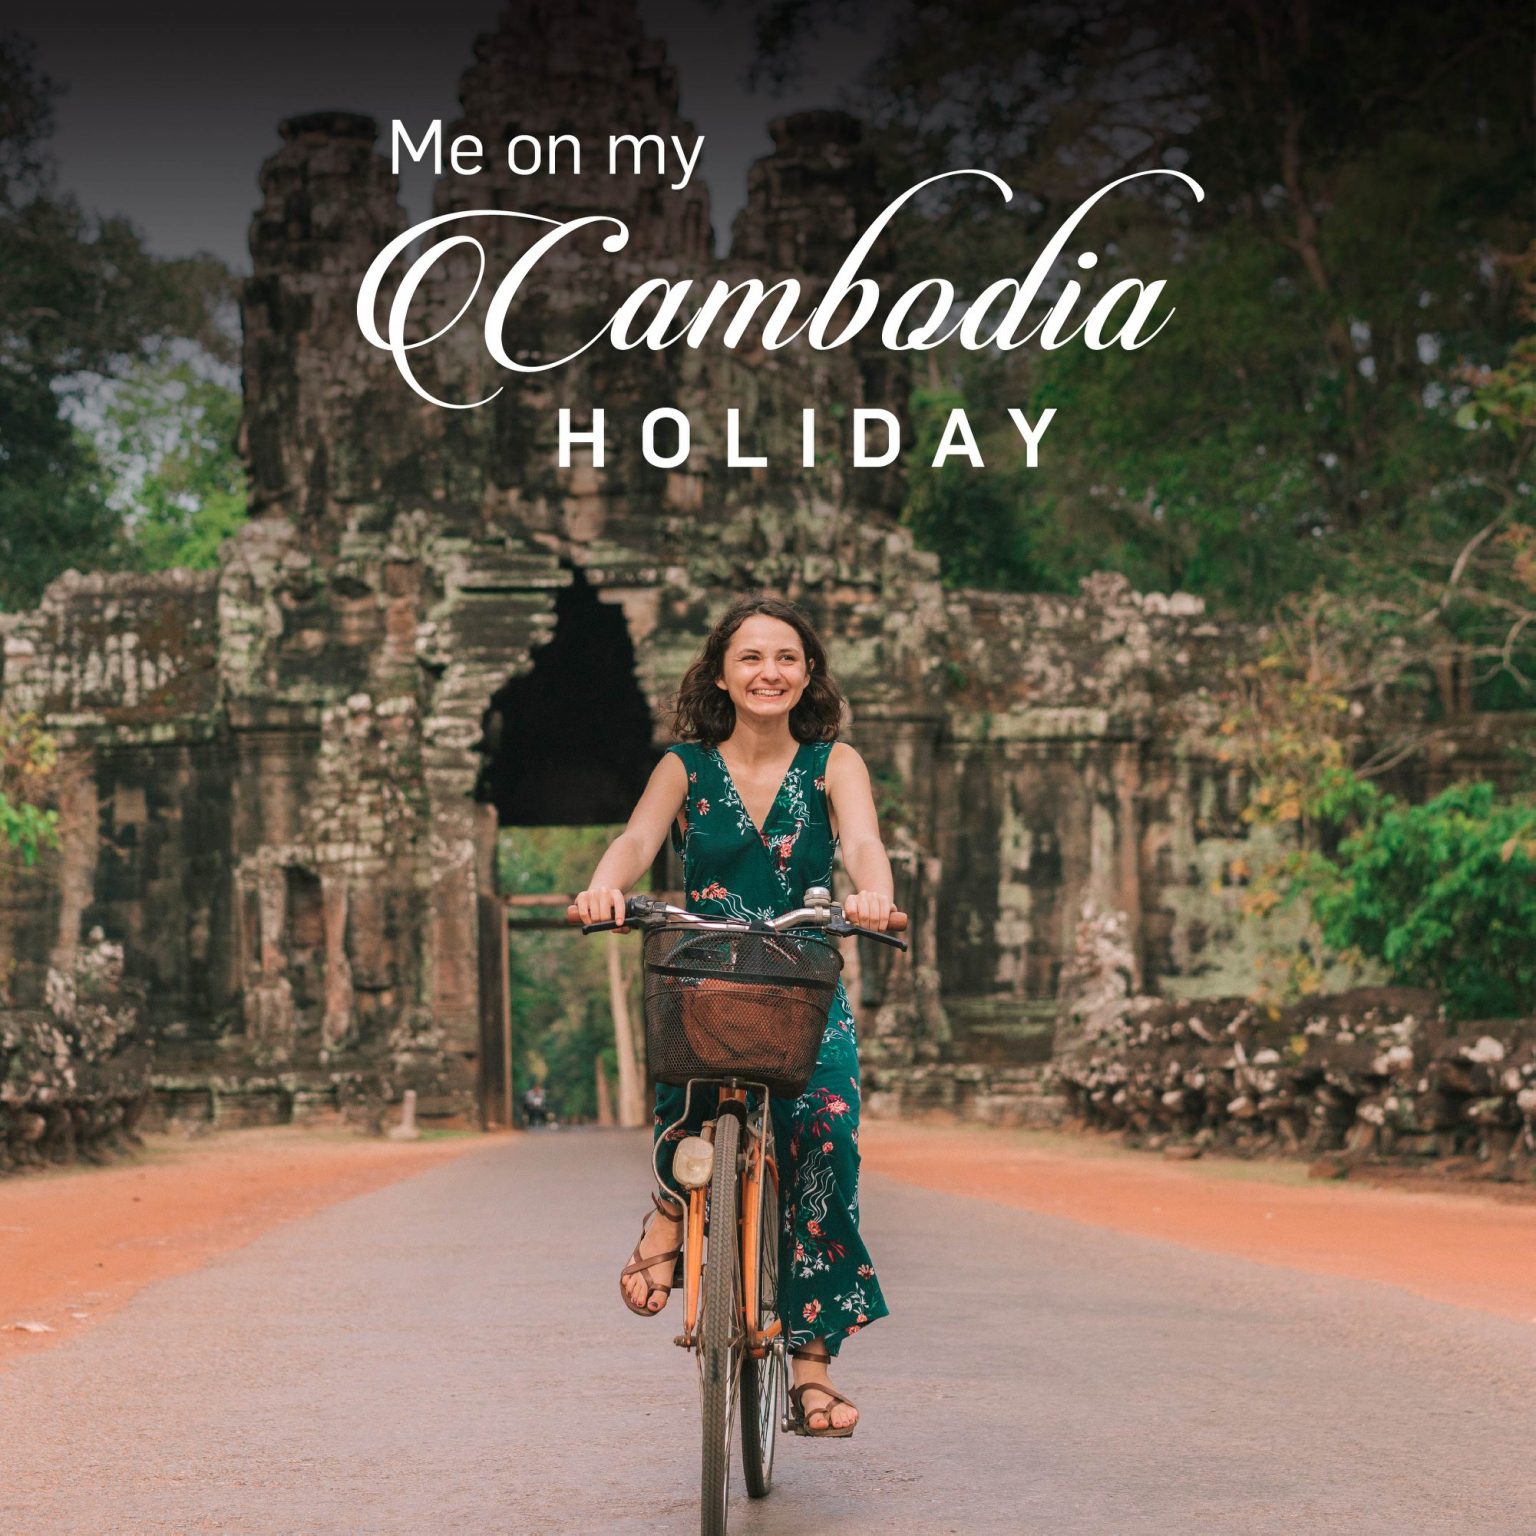 Cambodia an Enticing Holiday Destination